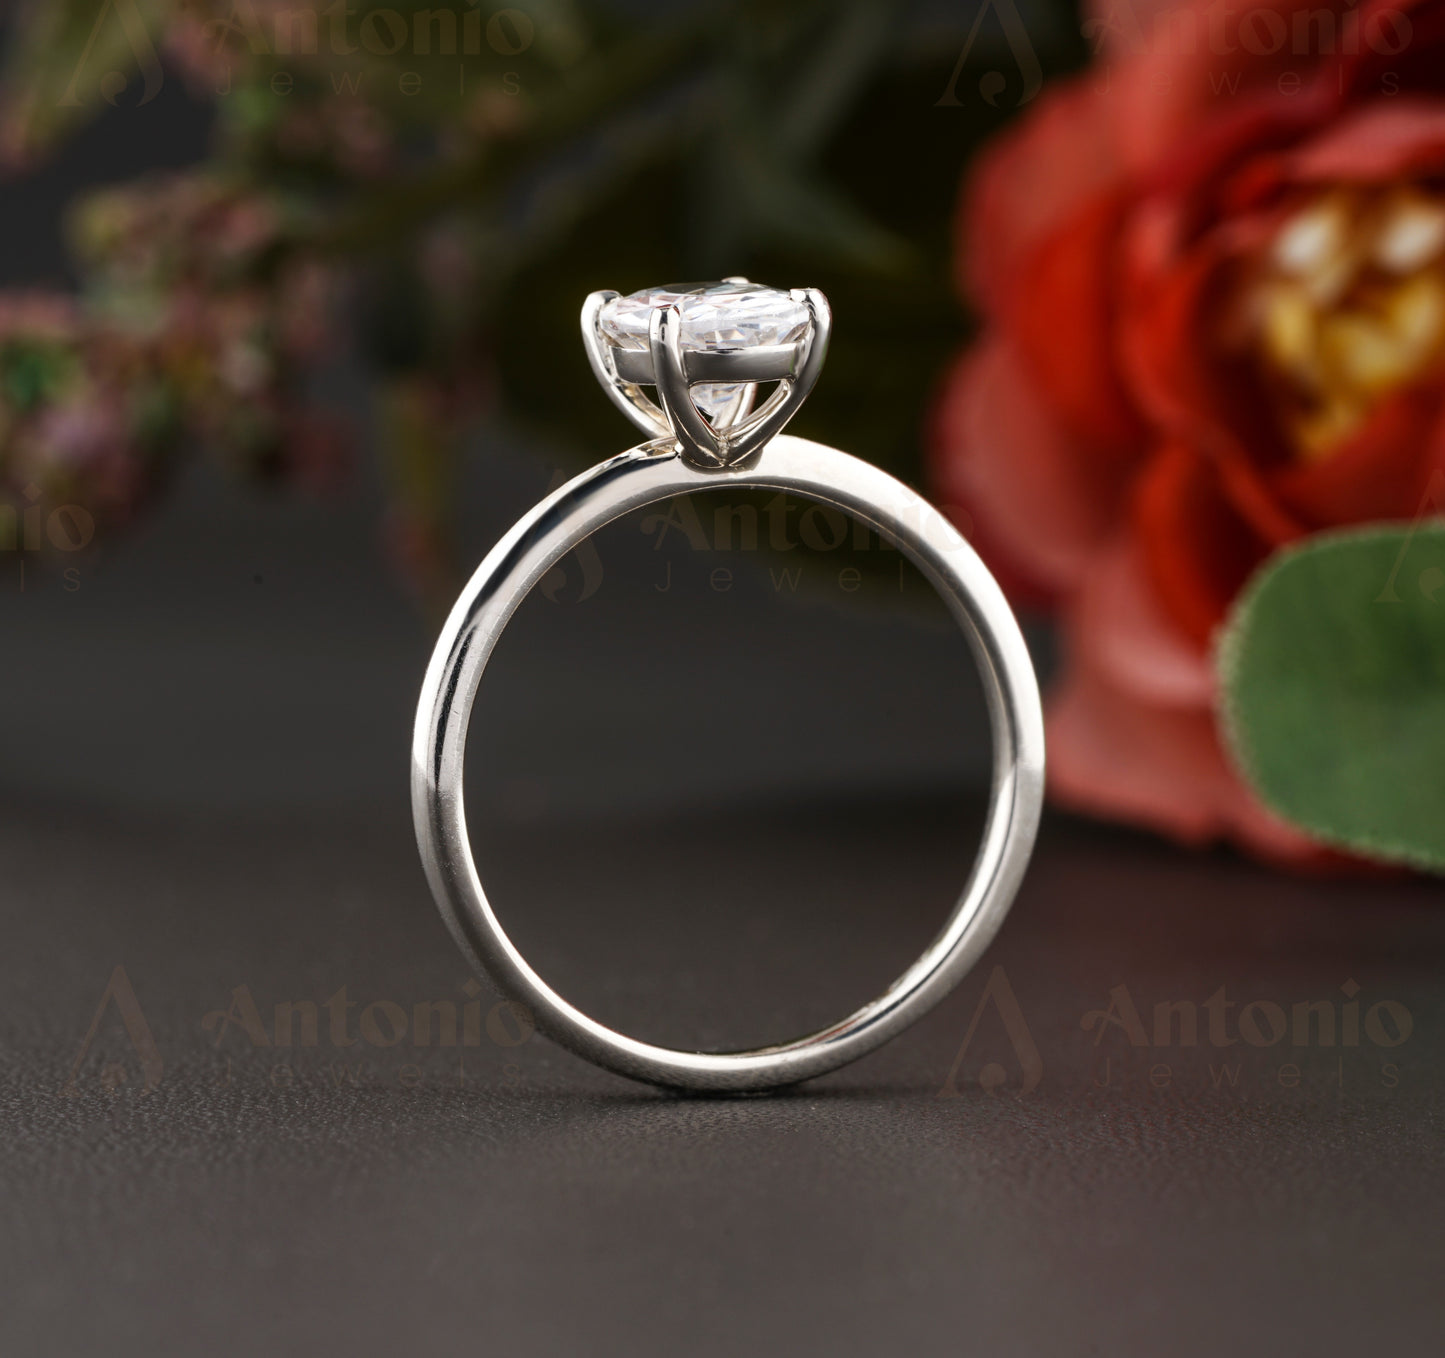 Oval Cut Moissanite Ring, Engagement Ring in 14K White Gold Ring